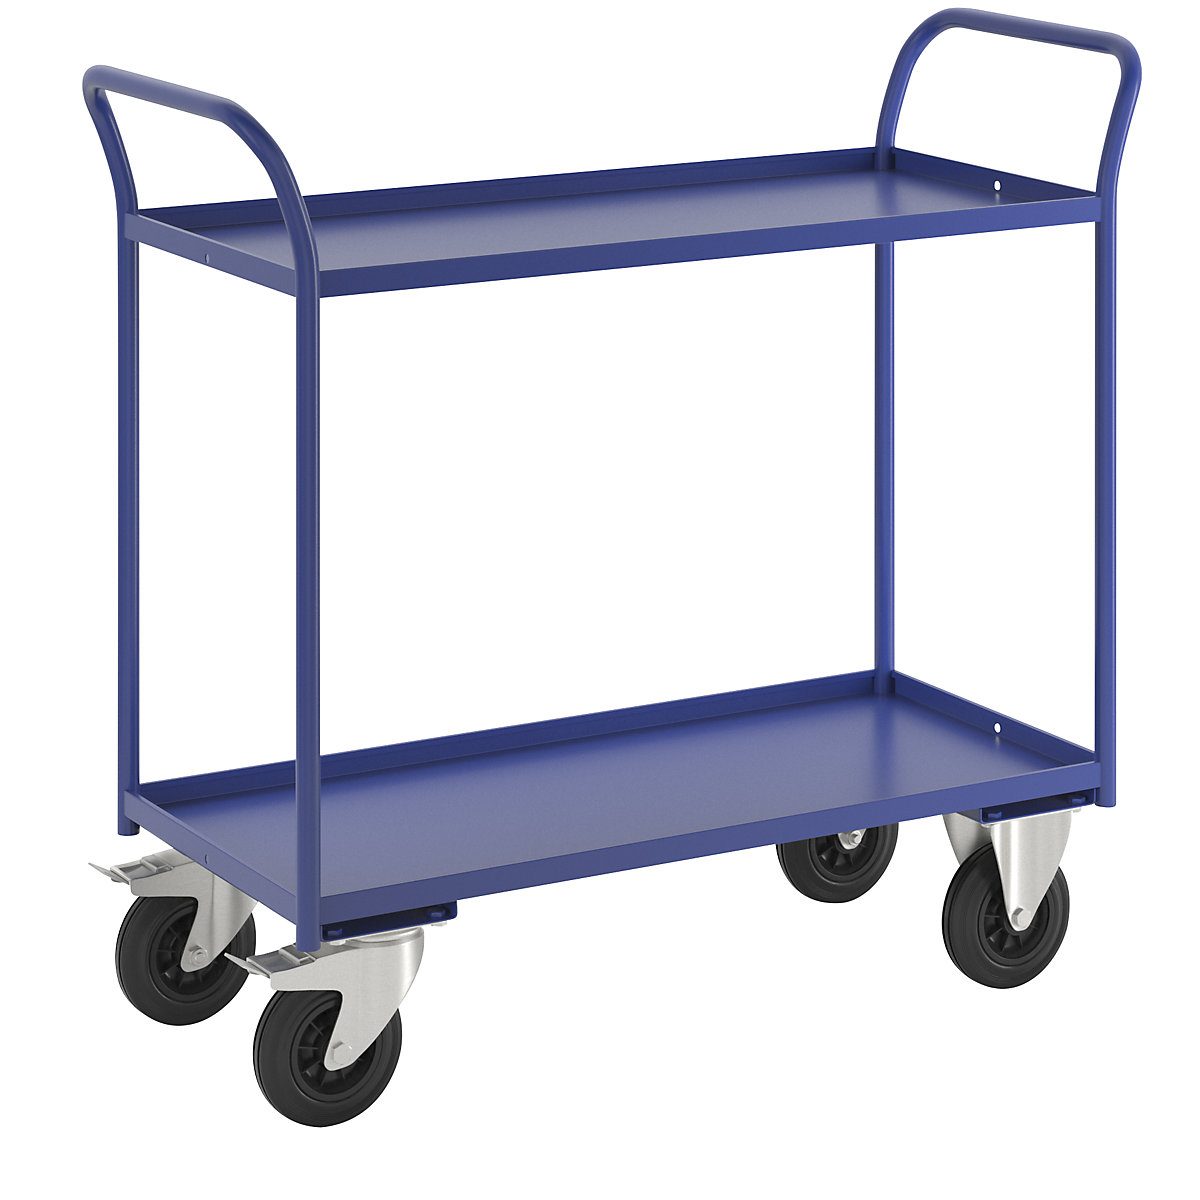 KM41 table trolley – Kongamek, 2 shelves with raised edges, LxWxH 1080 x 450 x 1000 mm, blue, 2 swivel castors with stops, 2 fixed castors-7